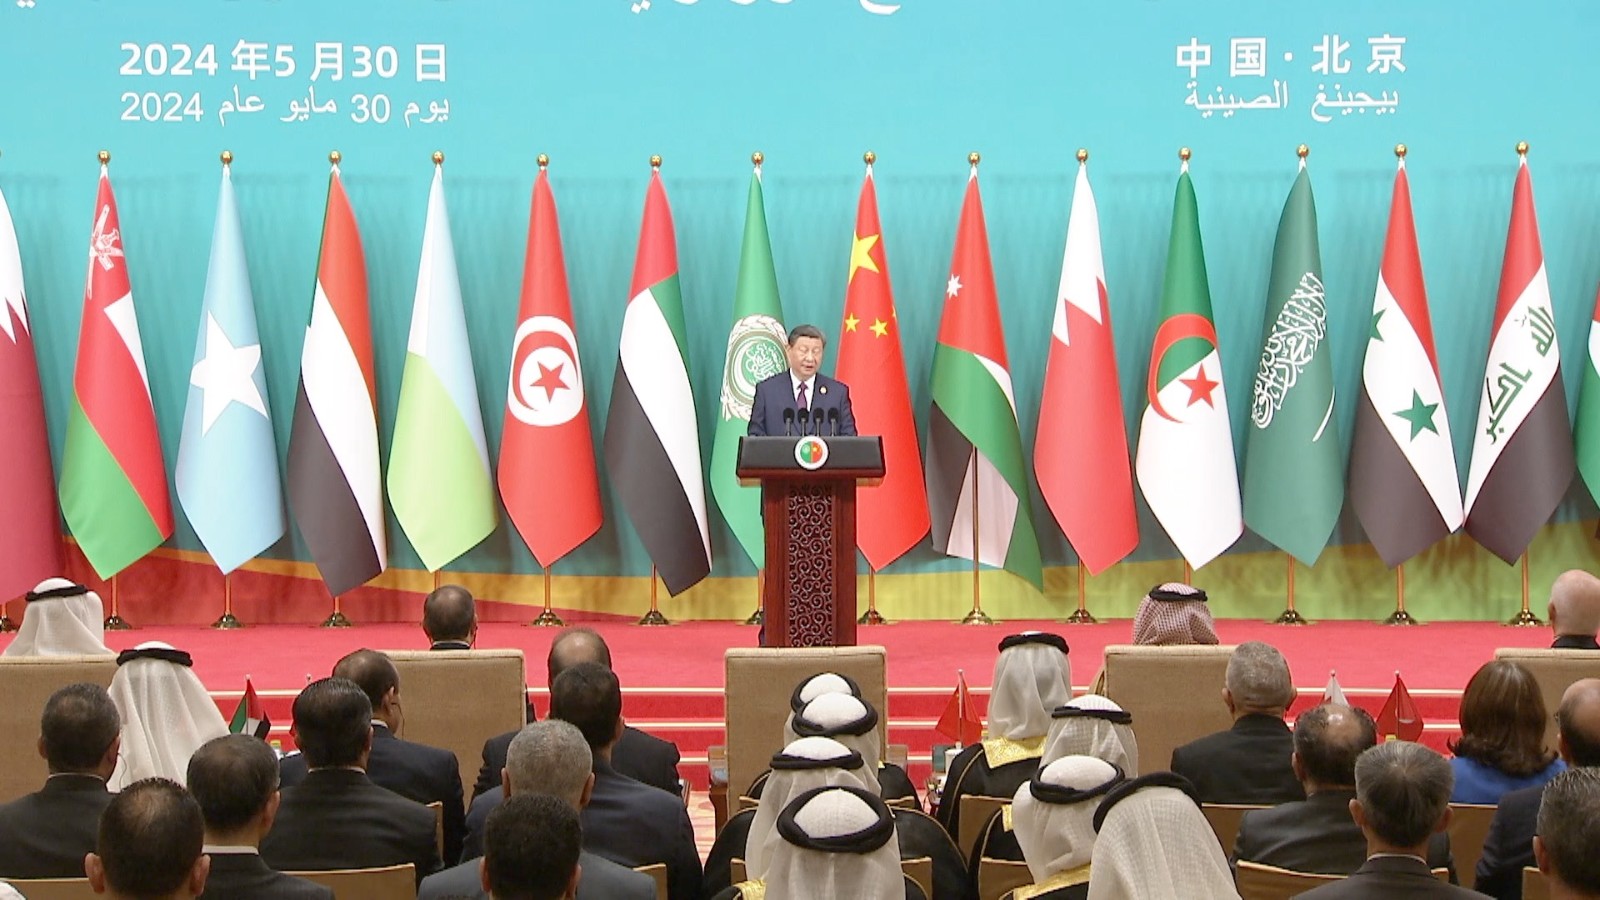 Xi Jinping: China, Arab states eye 10 million two-way tourist visits